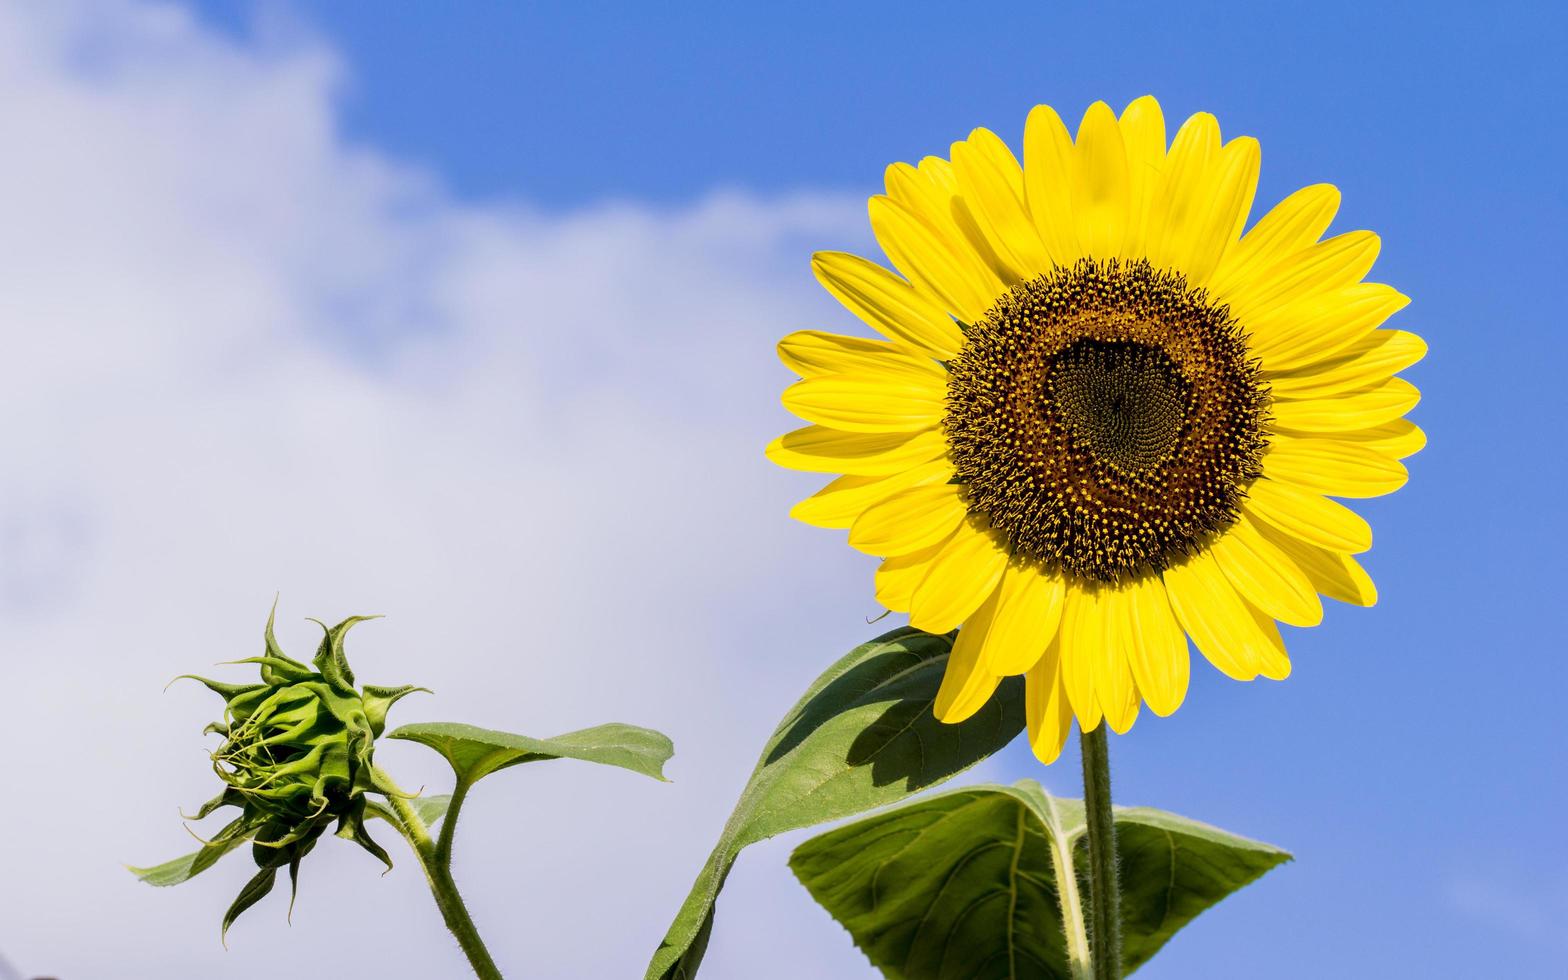 Bright sunflower against a blue sky photo